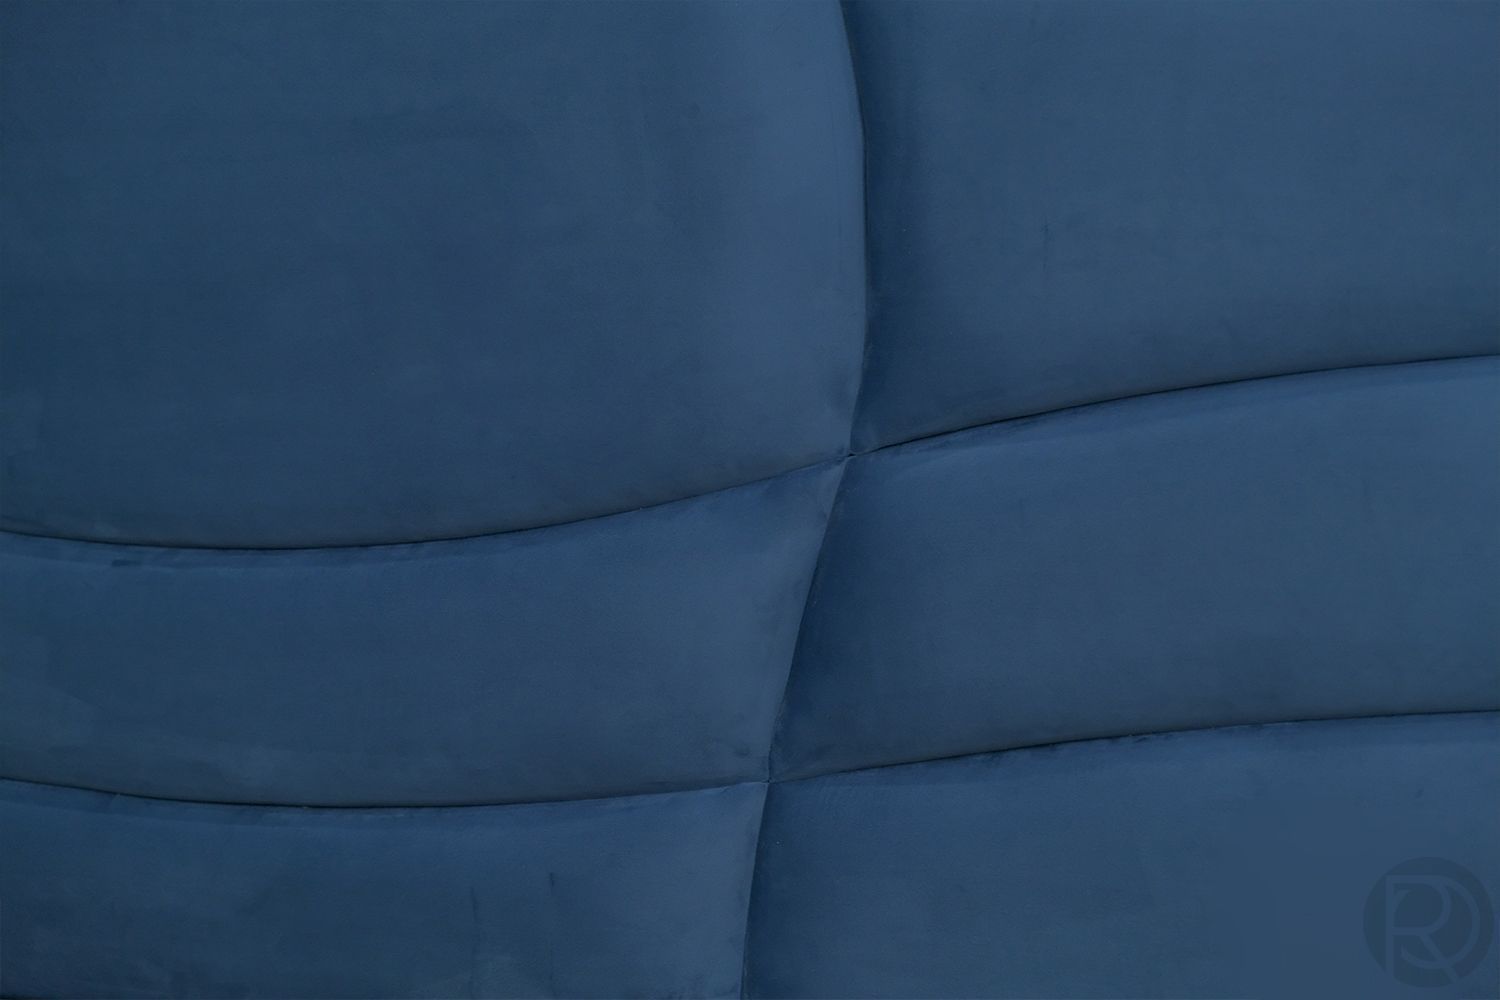 Bed CLAYTON BLUE by Romatti